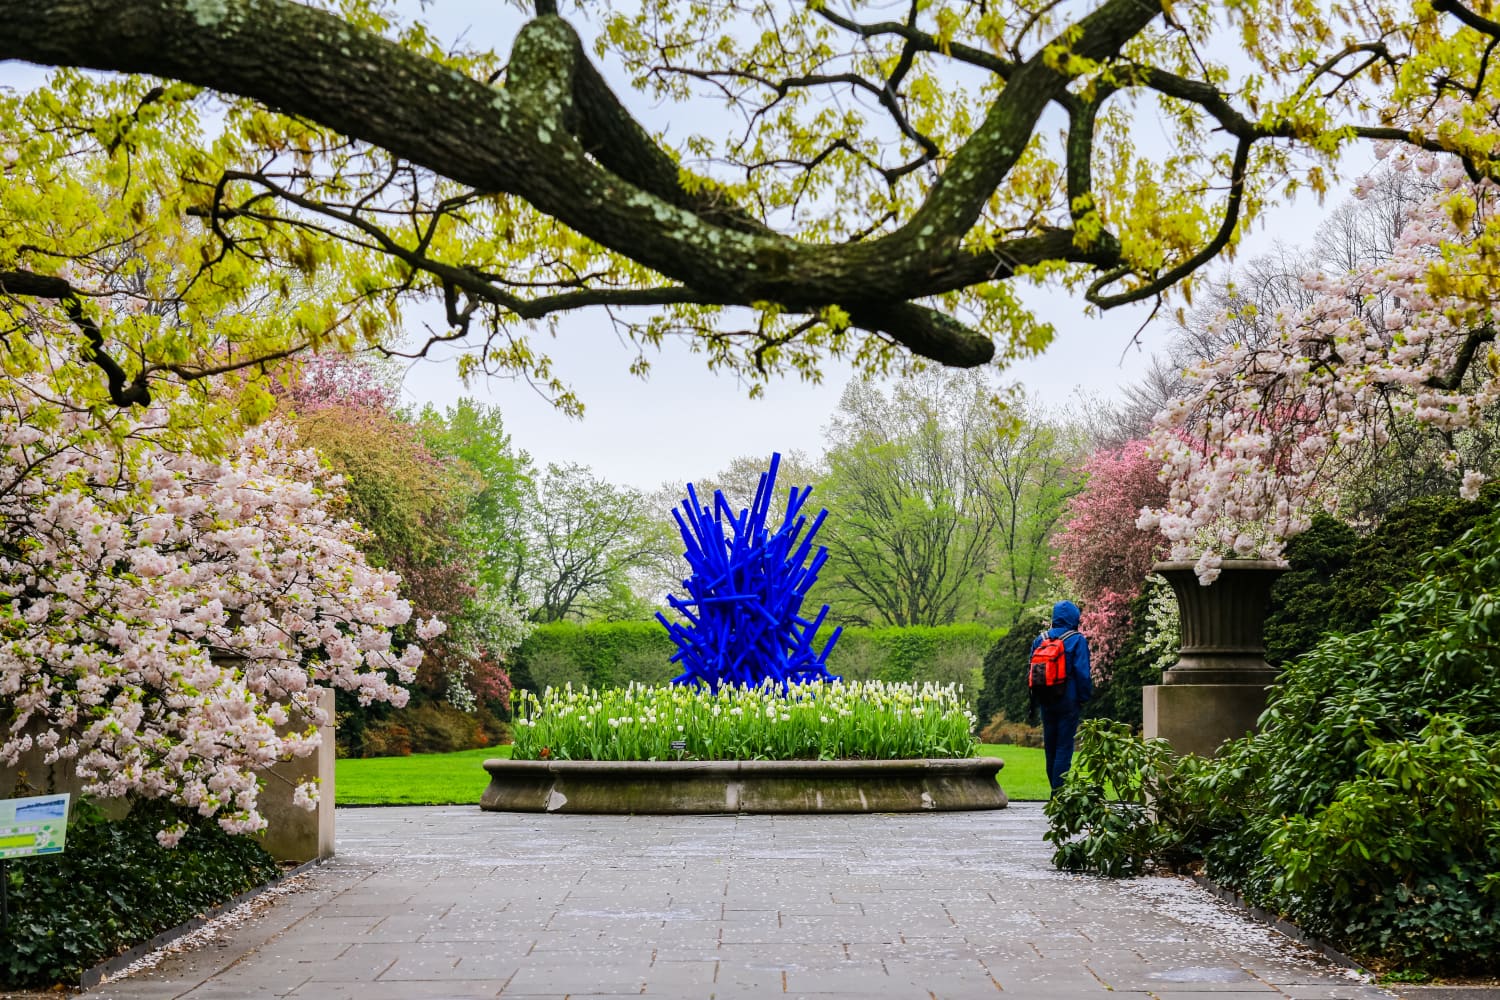 The Brooklyn Botanical Garden Has 33 New Artist-Designed Birdhouses on Display